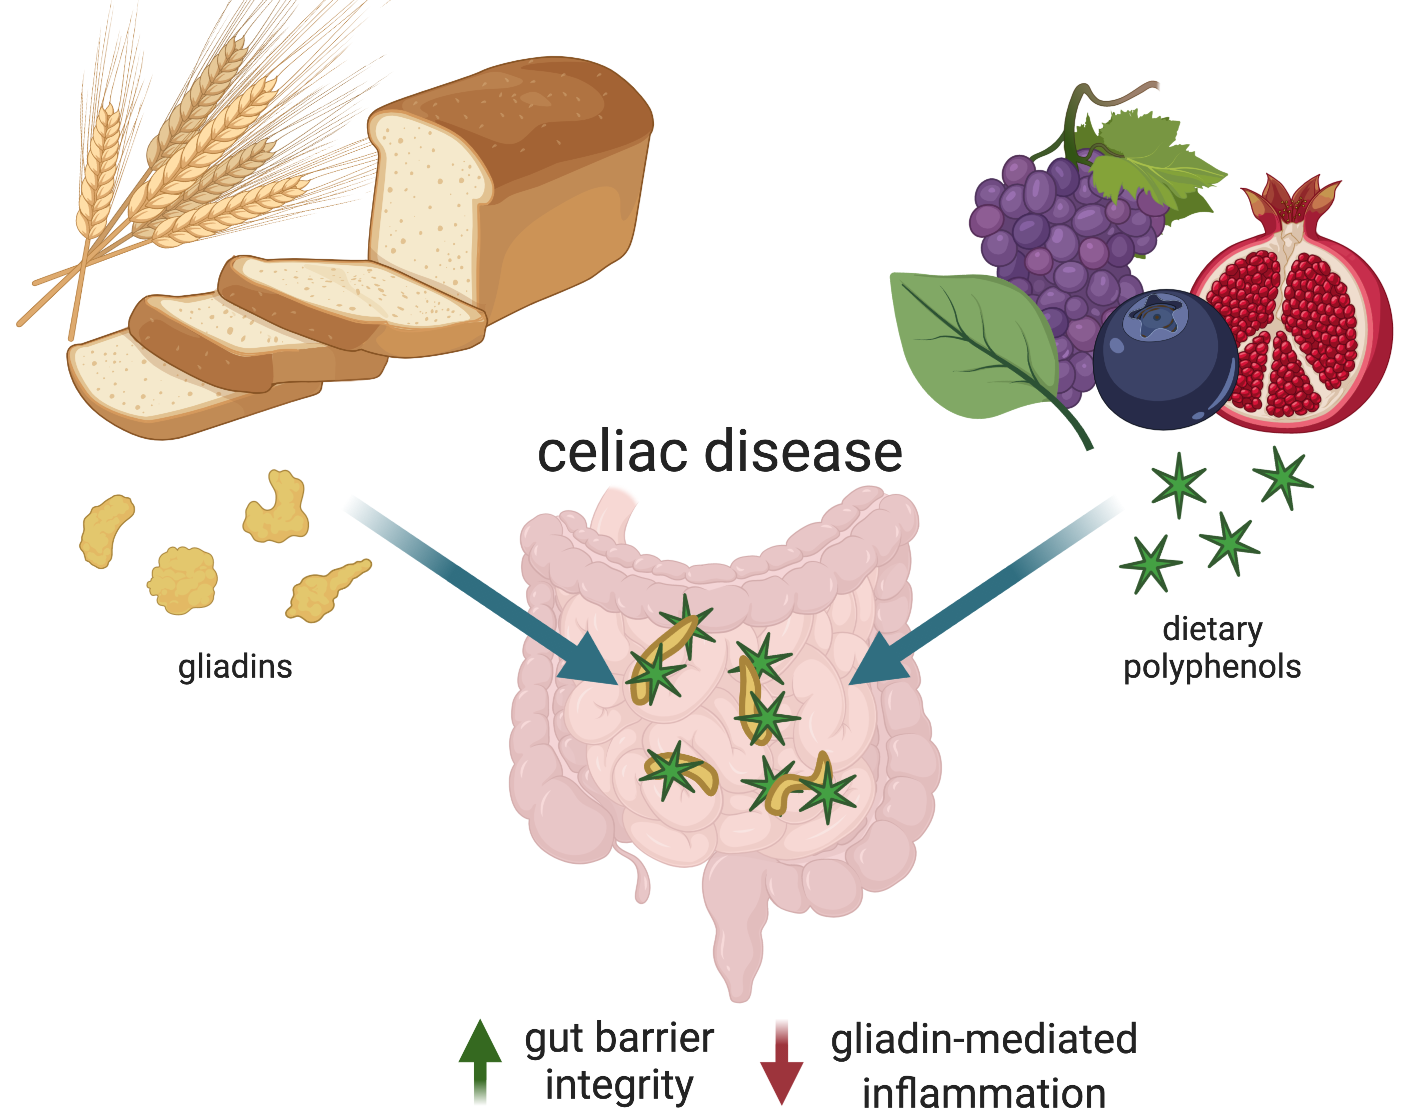 Celiac disease - NabahaKatalina